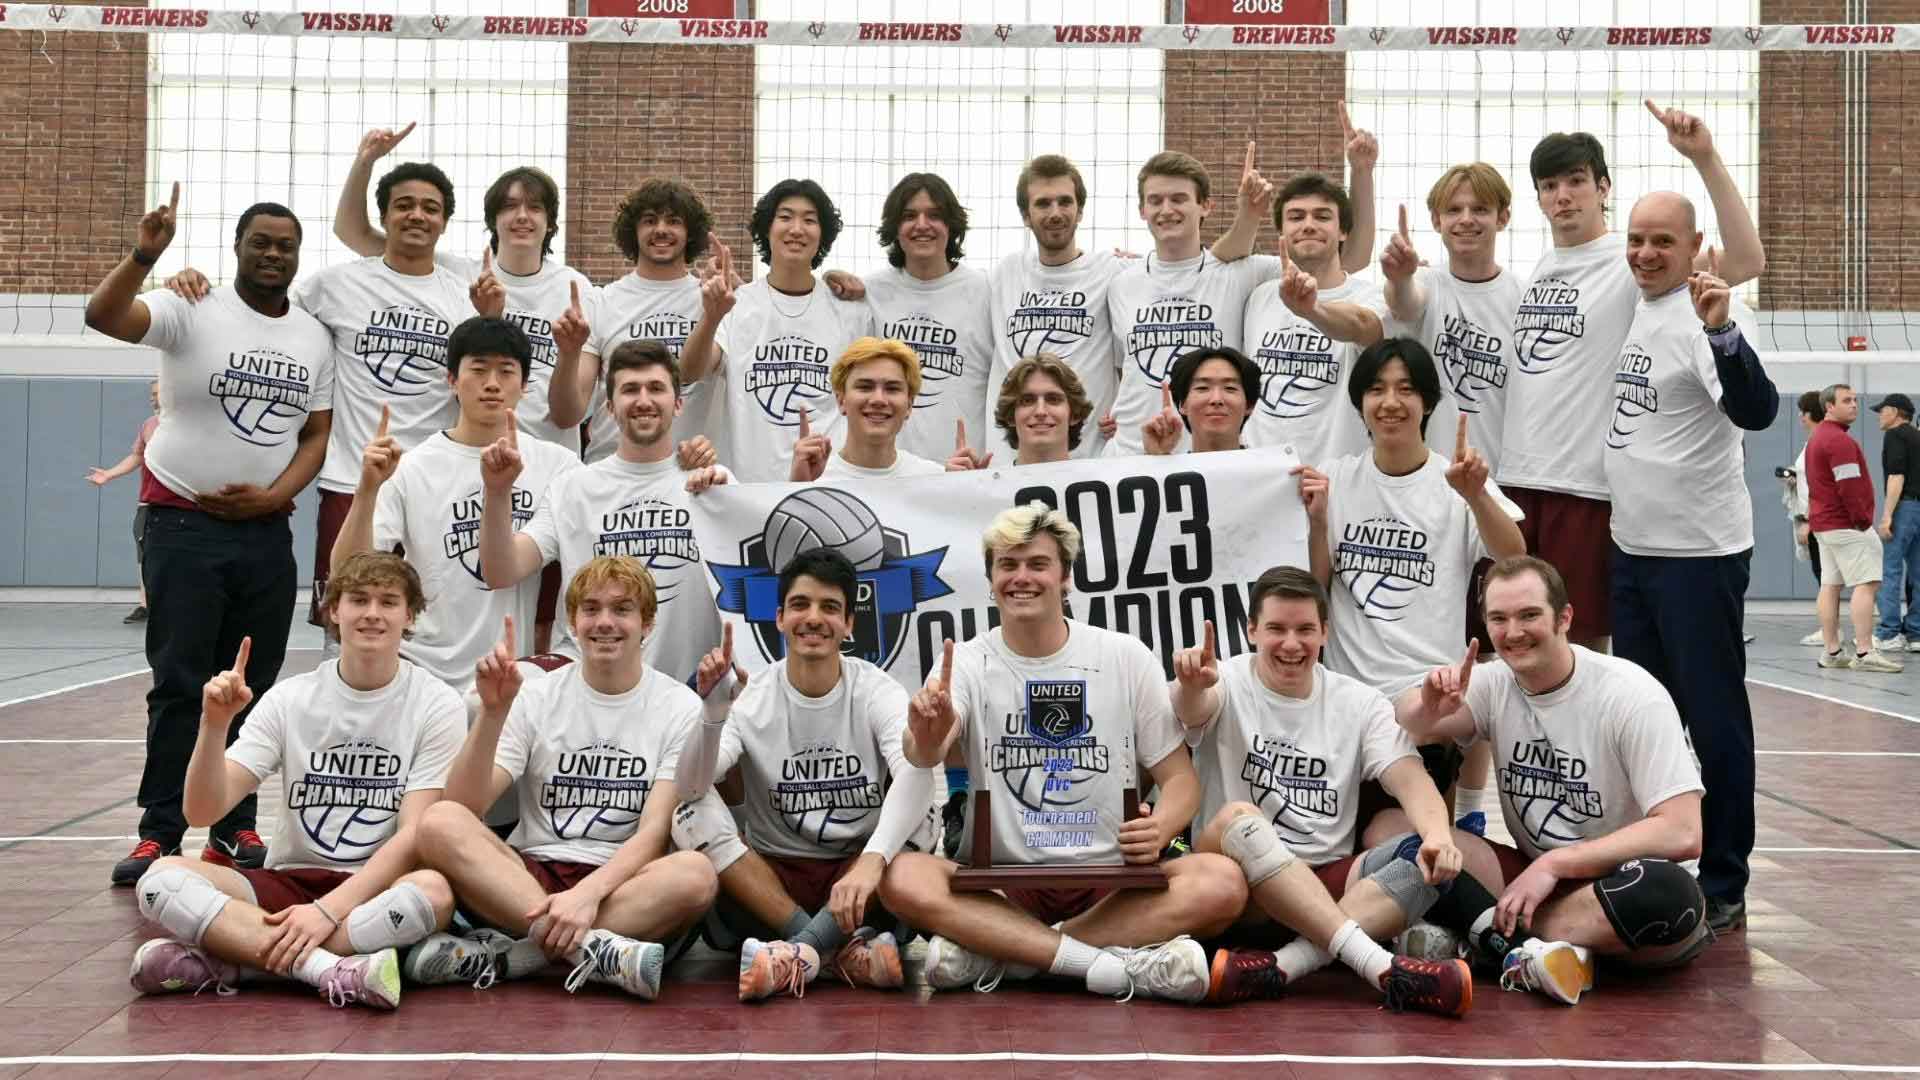 Team shot of the Vassar Men's Volleyball team